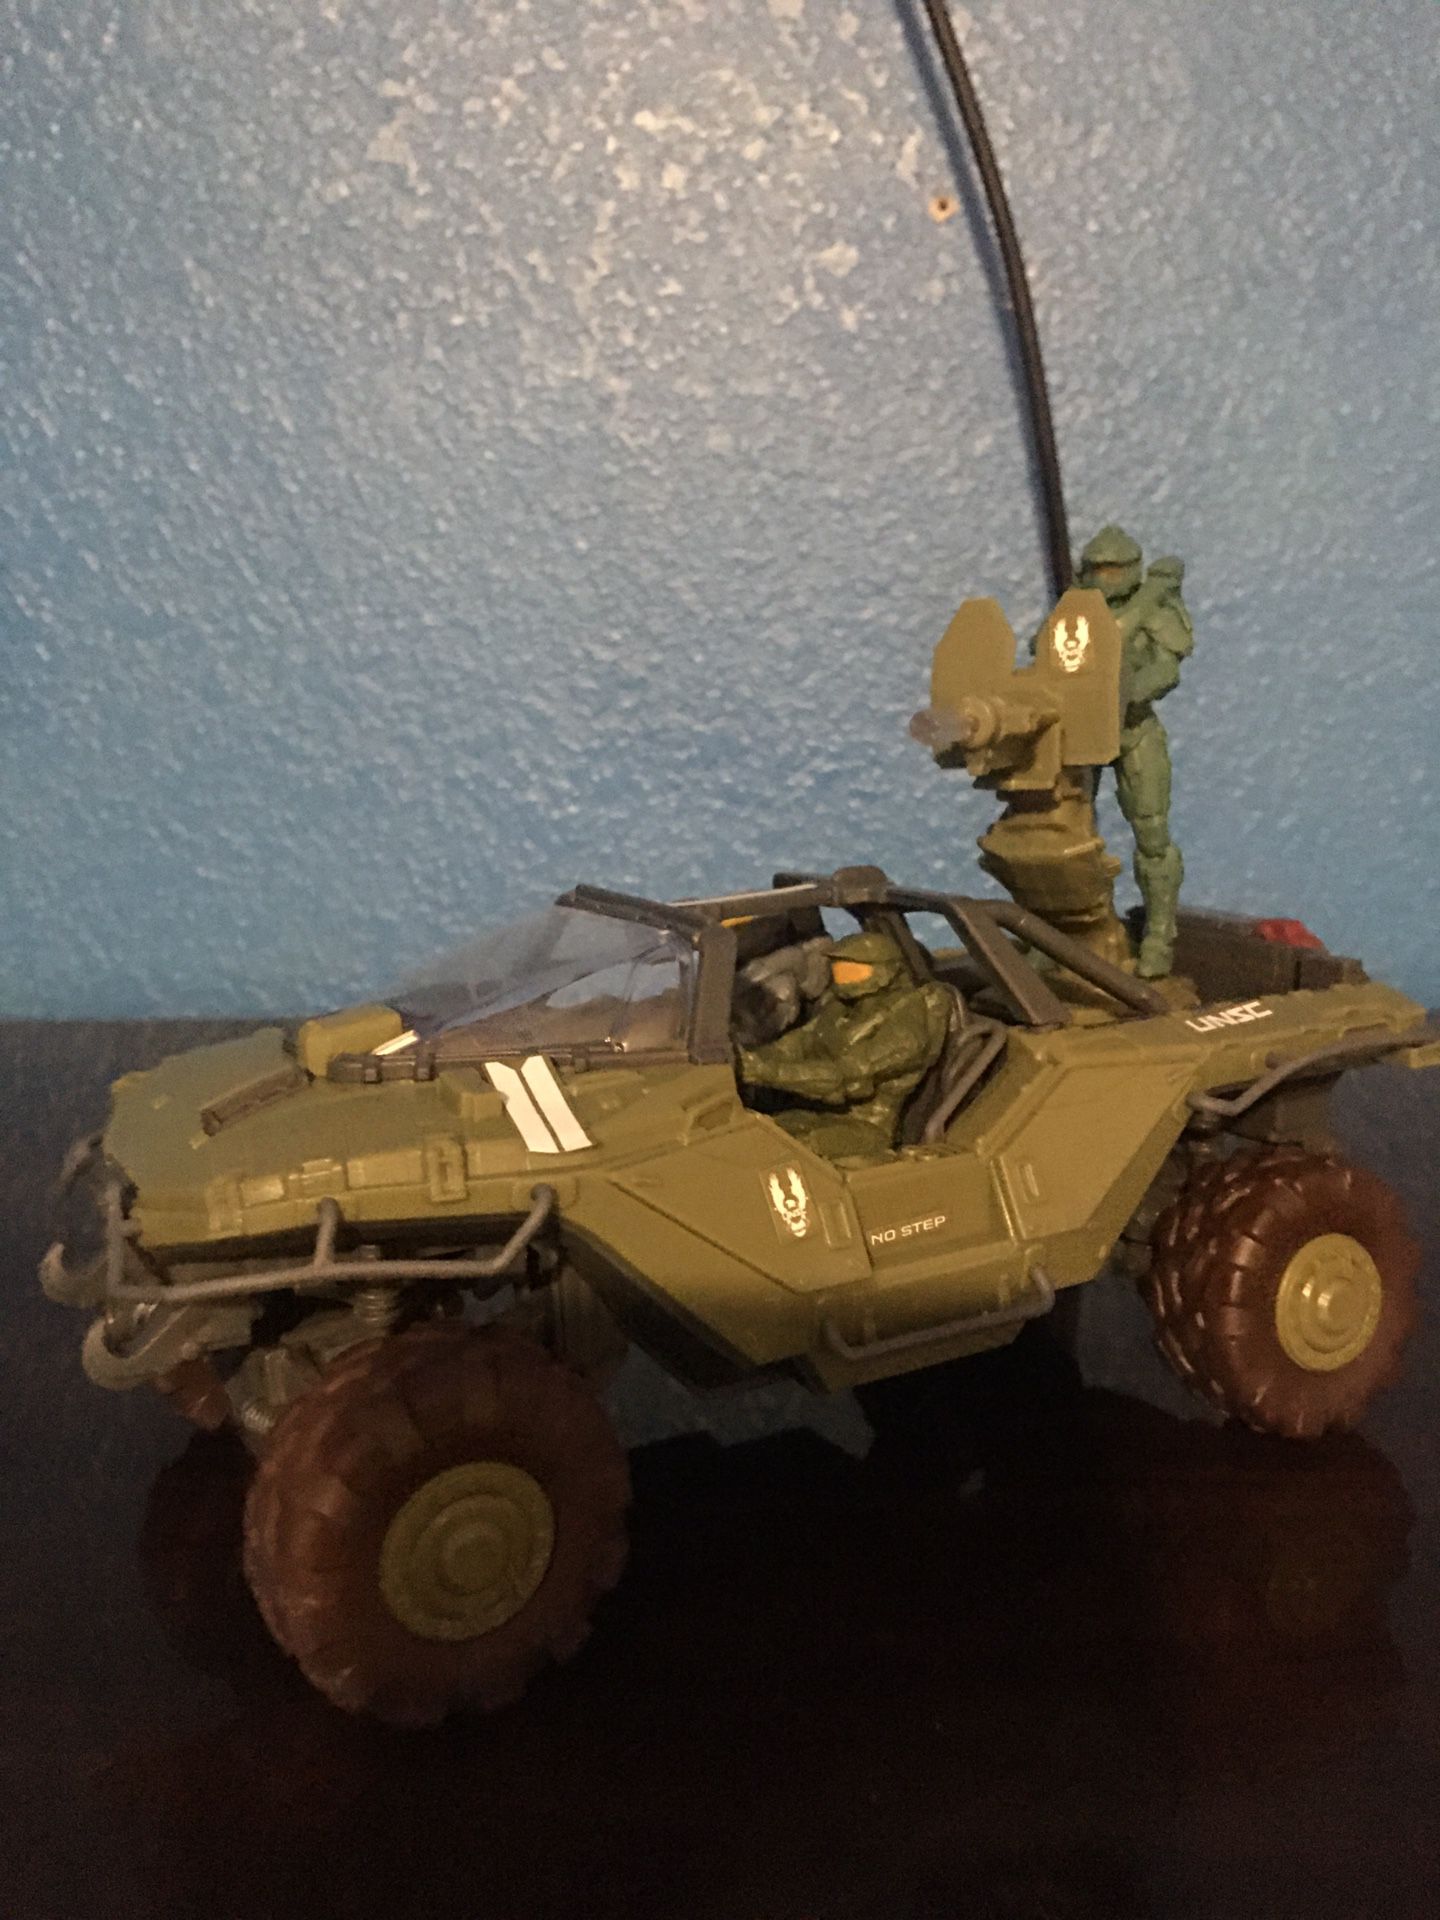 Halo Warthog Toy. $25 Obo.